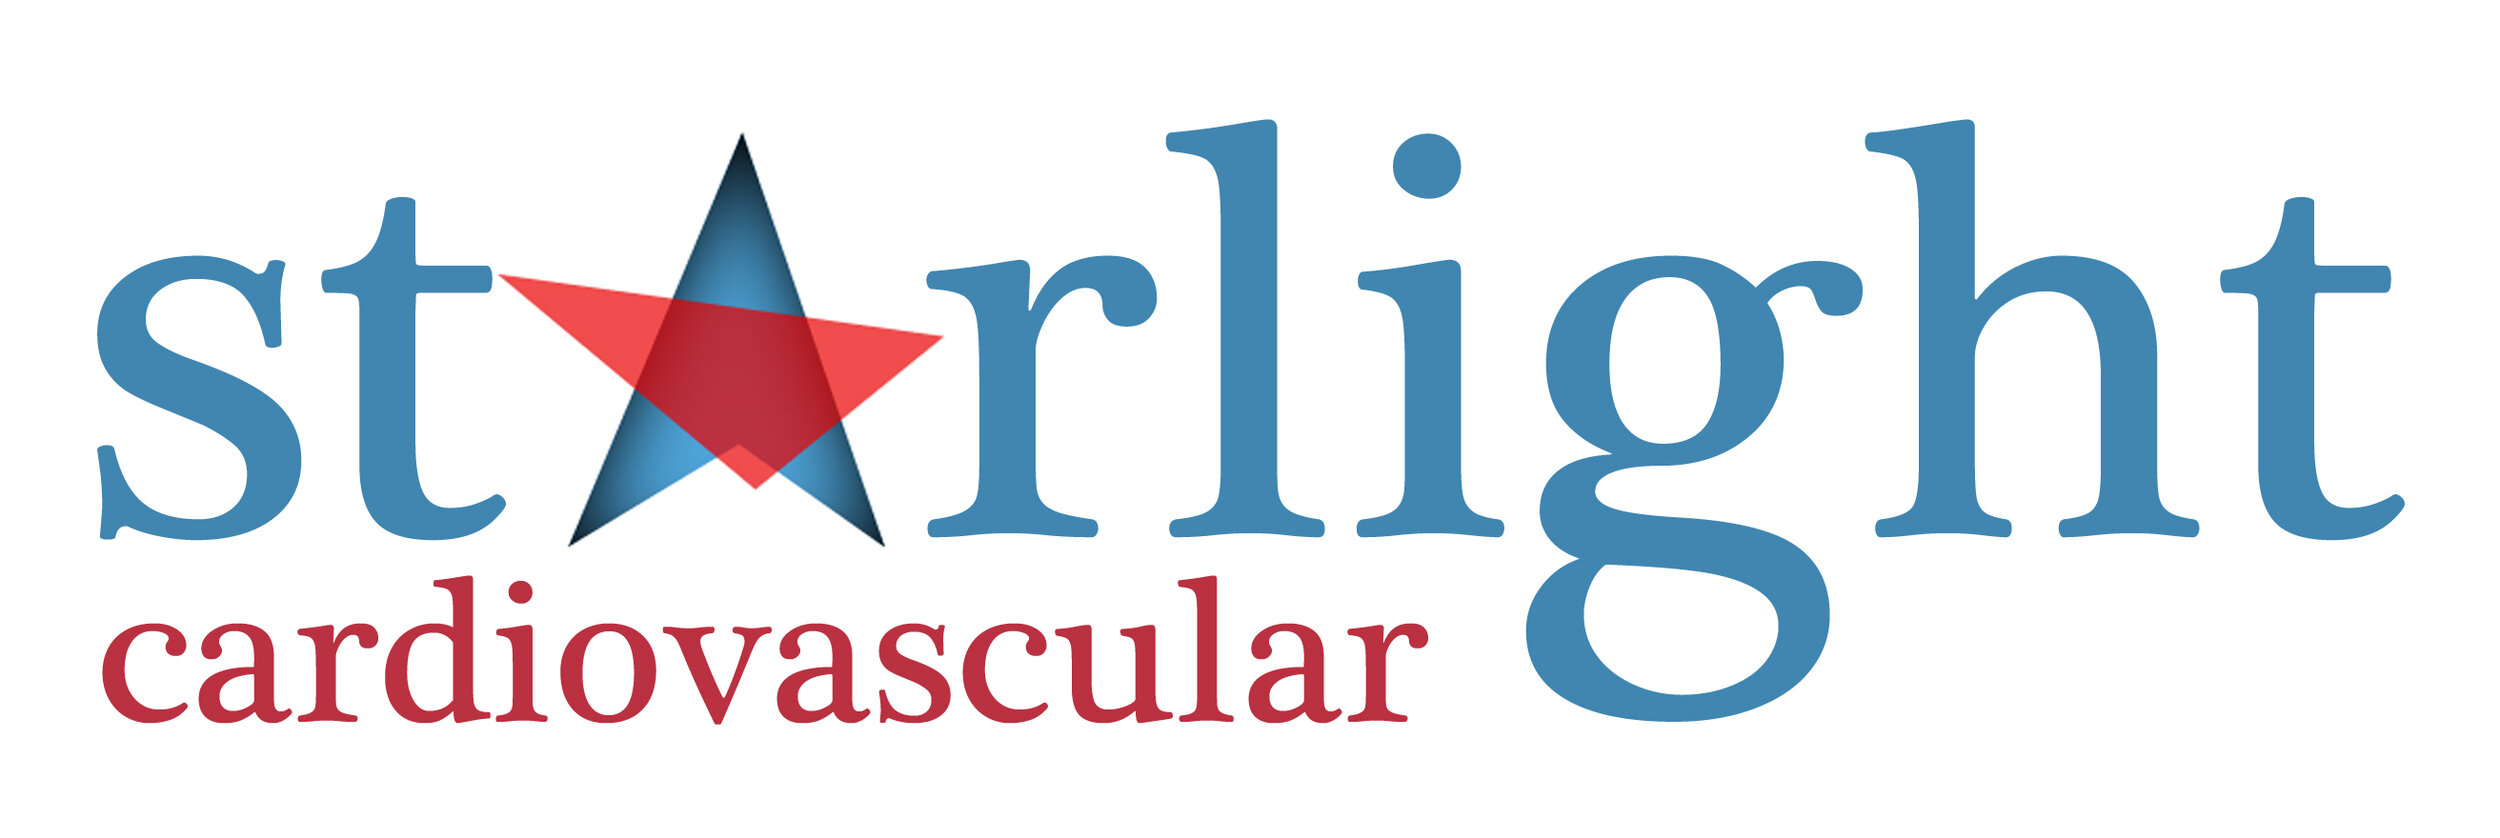 Starlight Cardiovascular